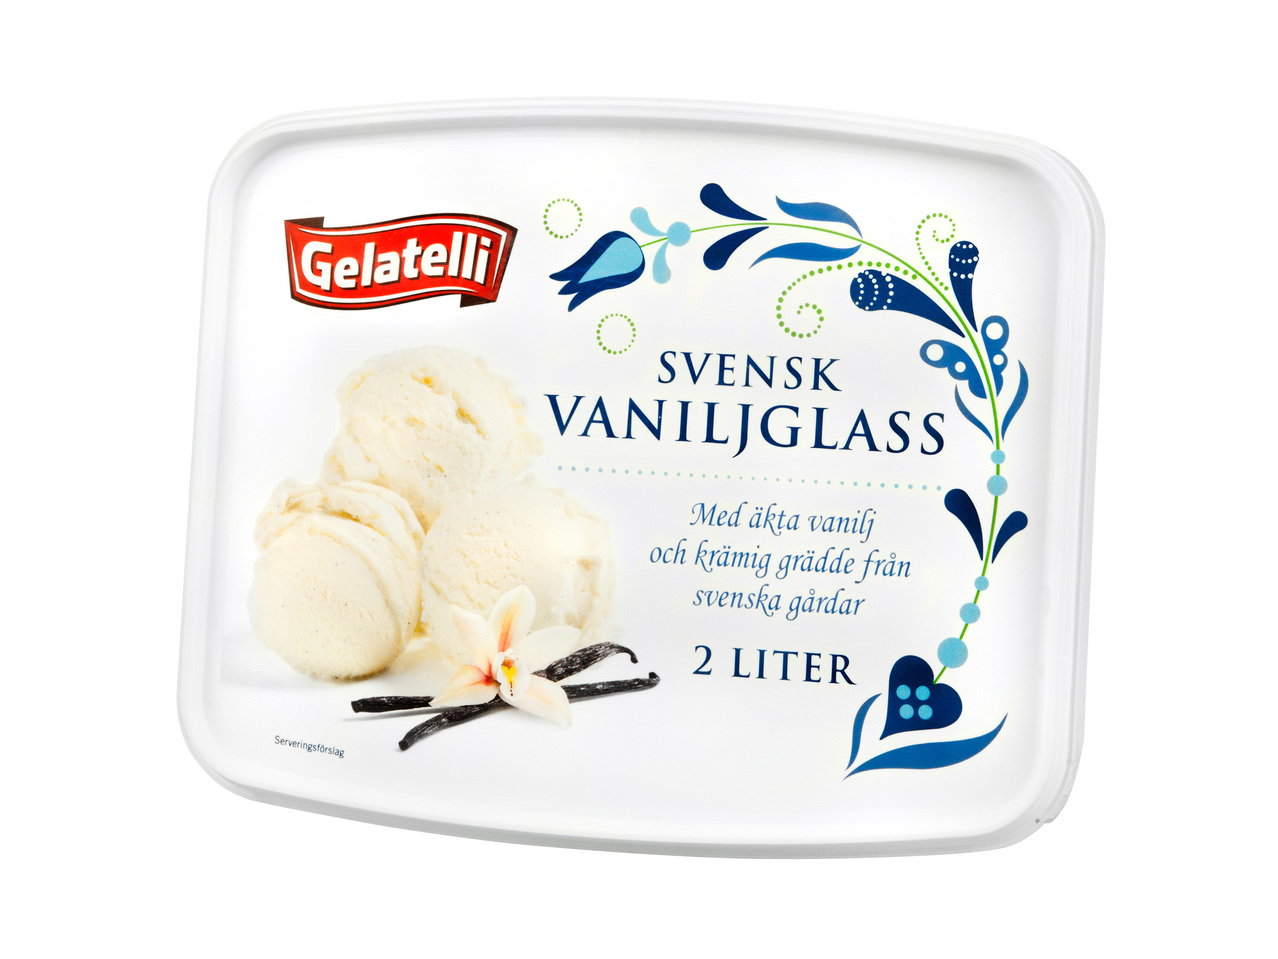 Svensk gräddglass vanilj